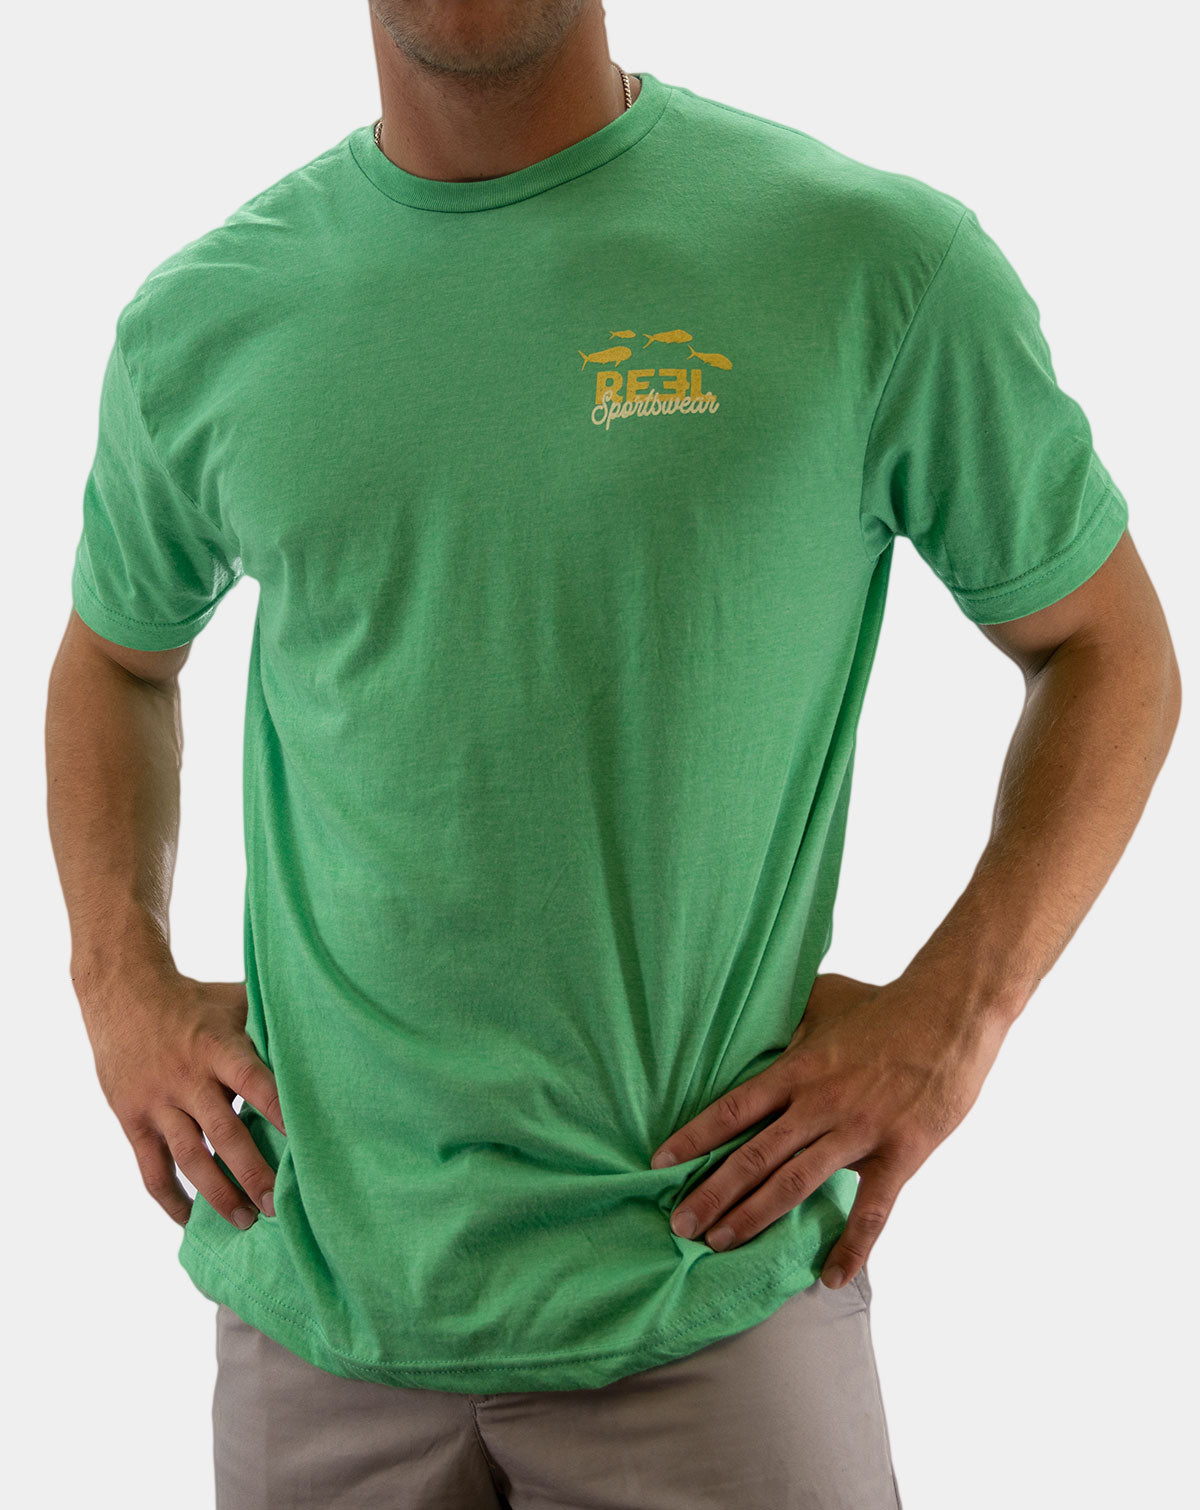 Dorado - Reel Sportswear Fishing T-shirt